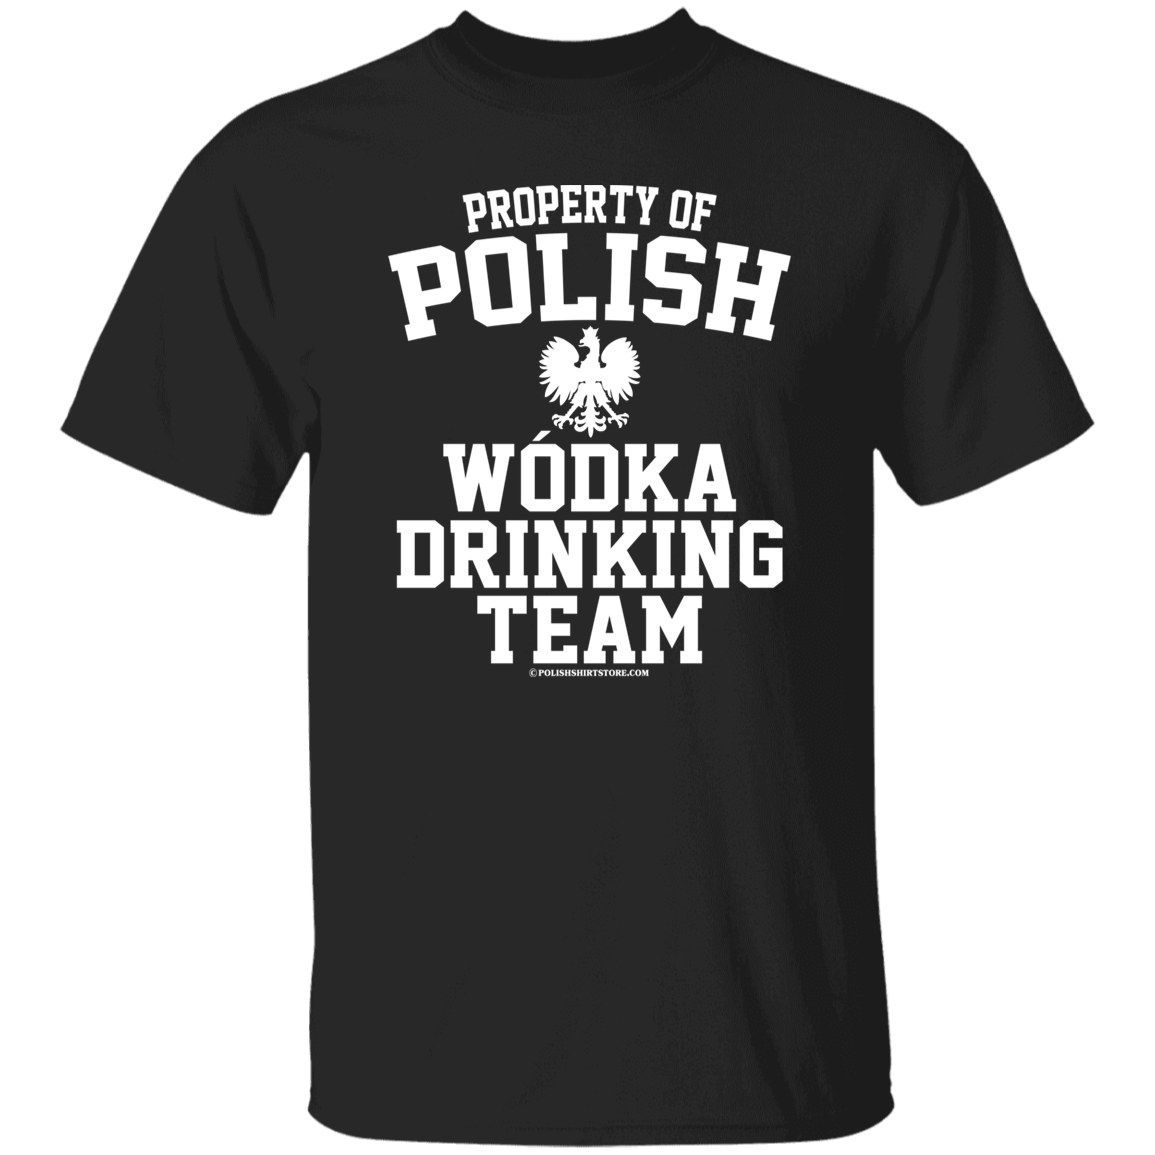 Property of Polish Wodka Drinking Team Apparel CustomCat G500 5.3 oz. T-Shirt Black S